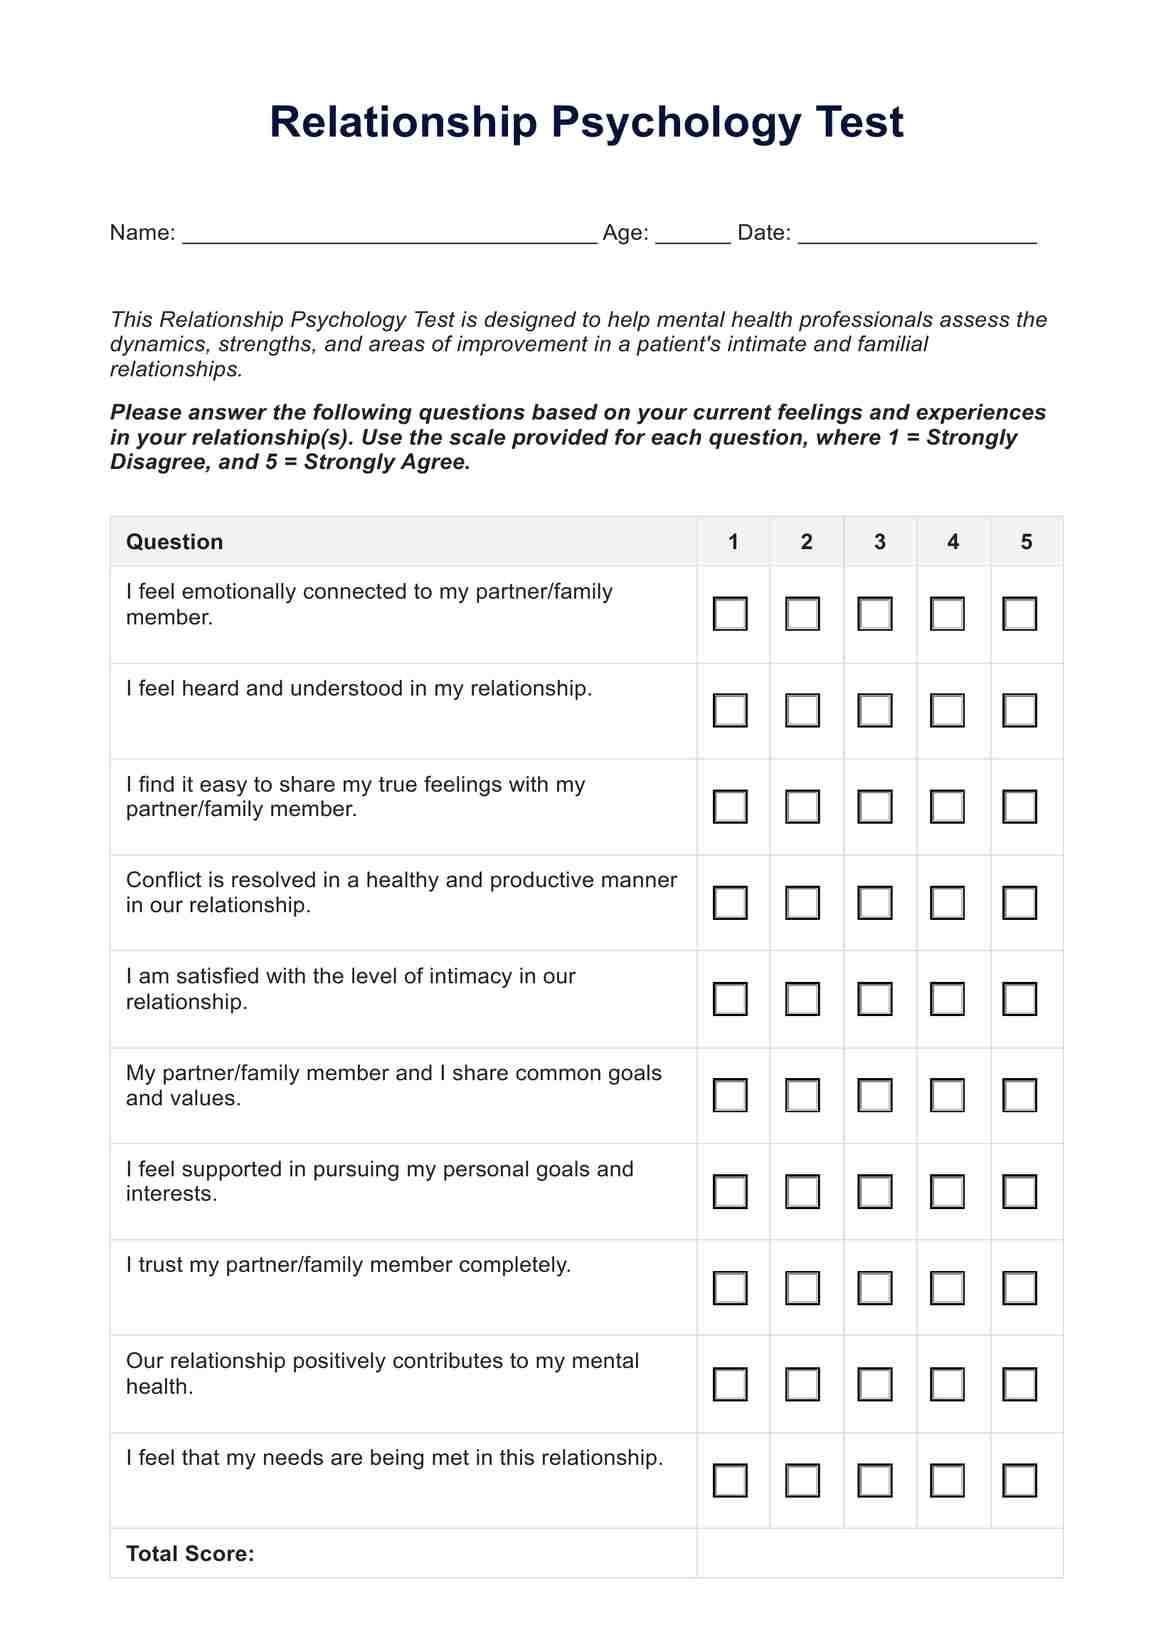 Relationship Psychology Test PDF Example